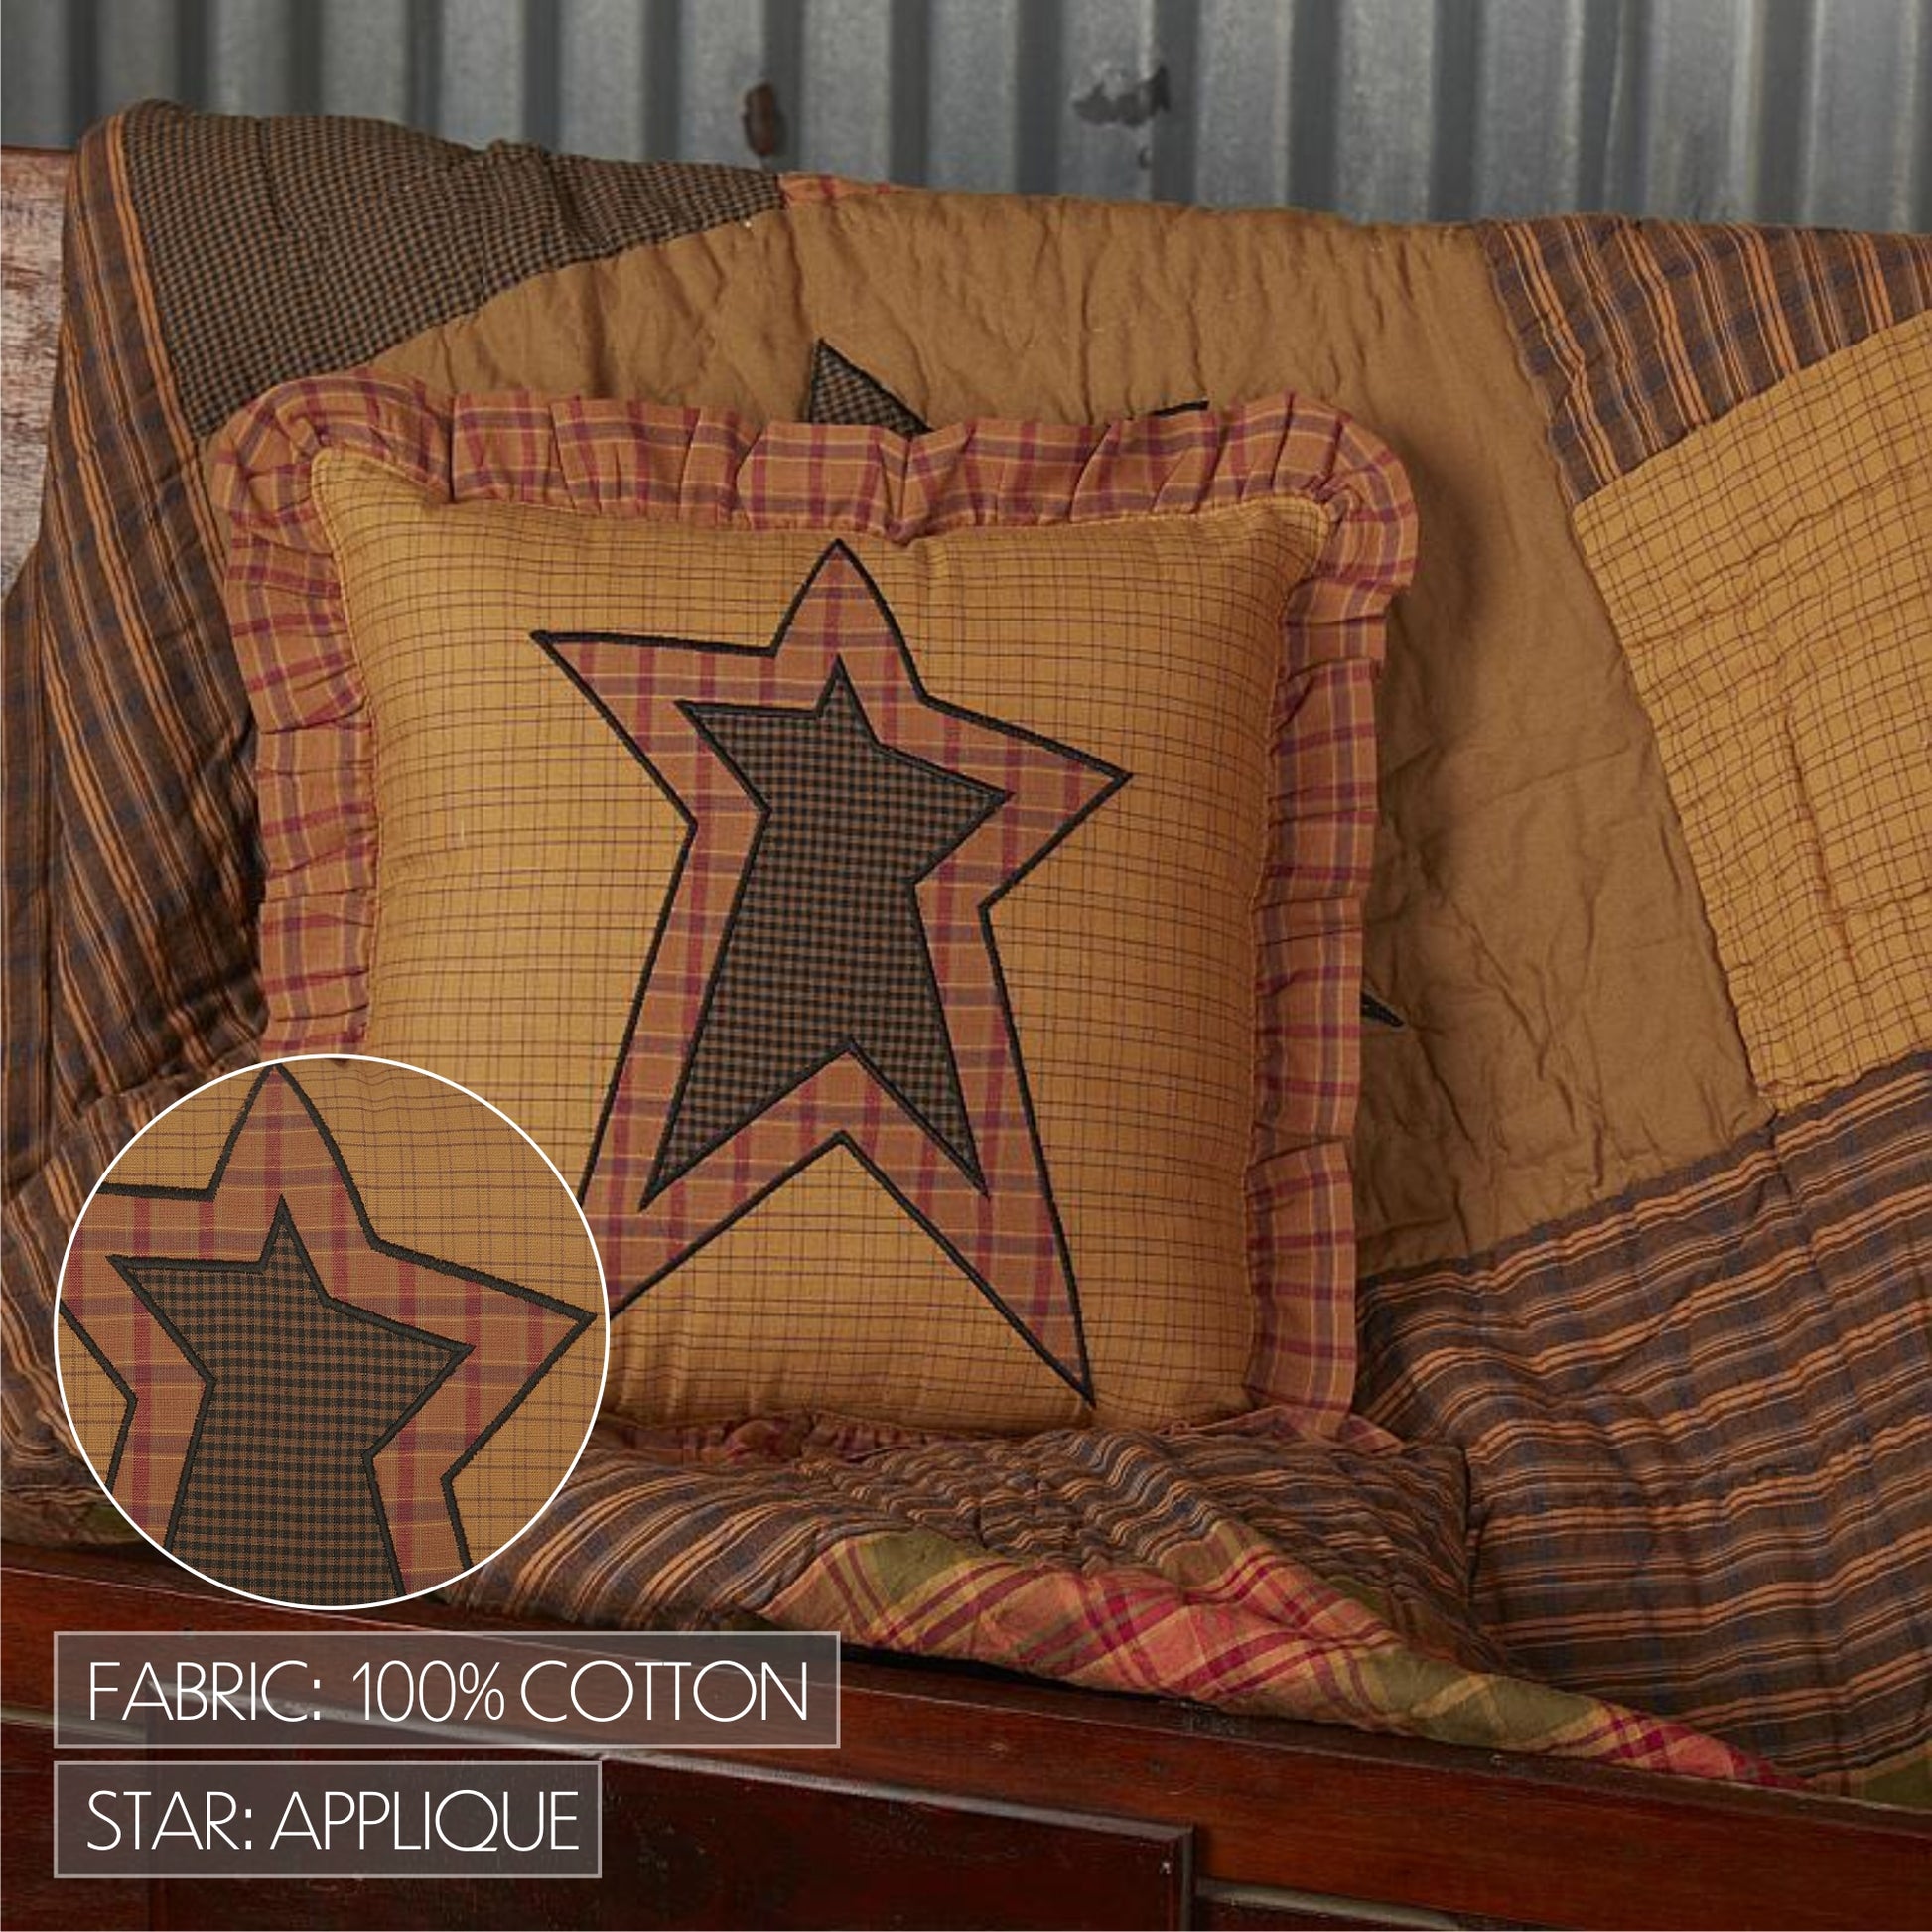 56781-Stratton-Applique-Star-Pillow-12x12-image-2